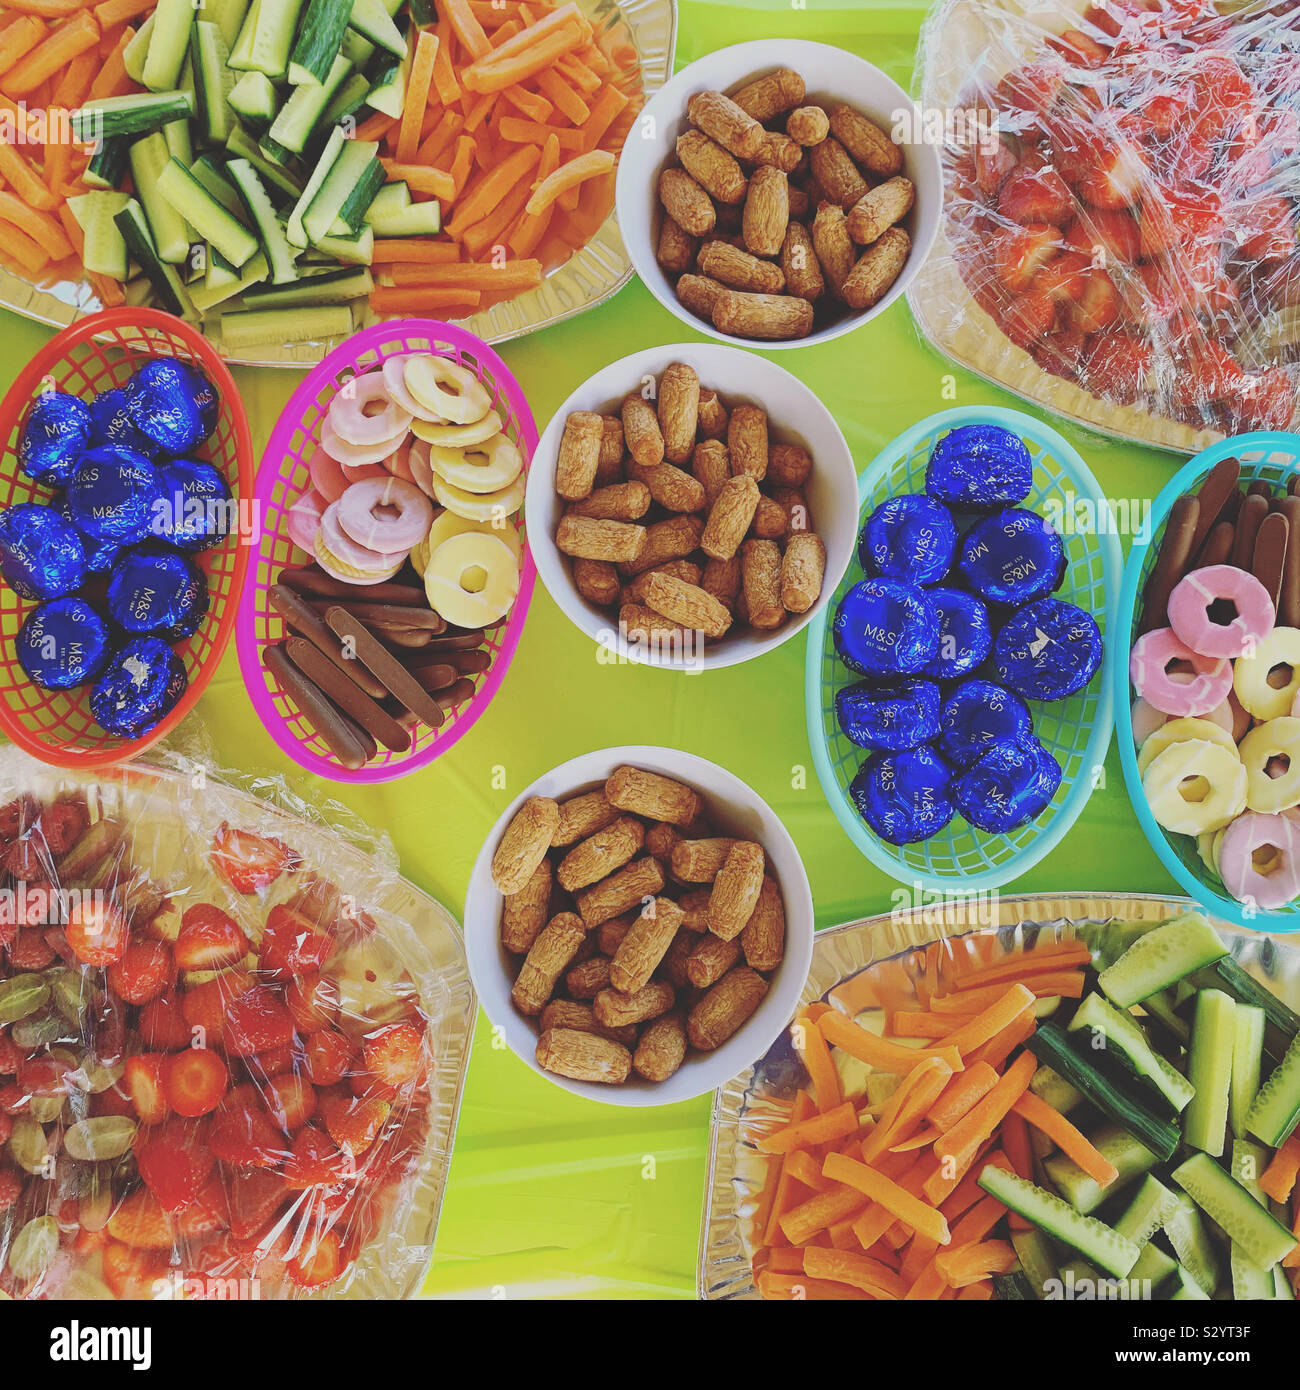 Children's Party Food Stockfoto